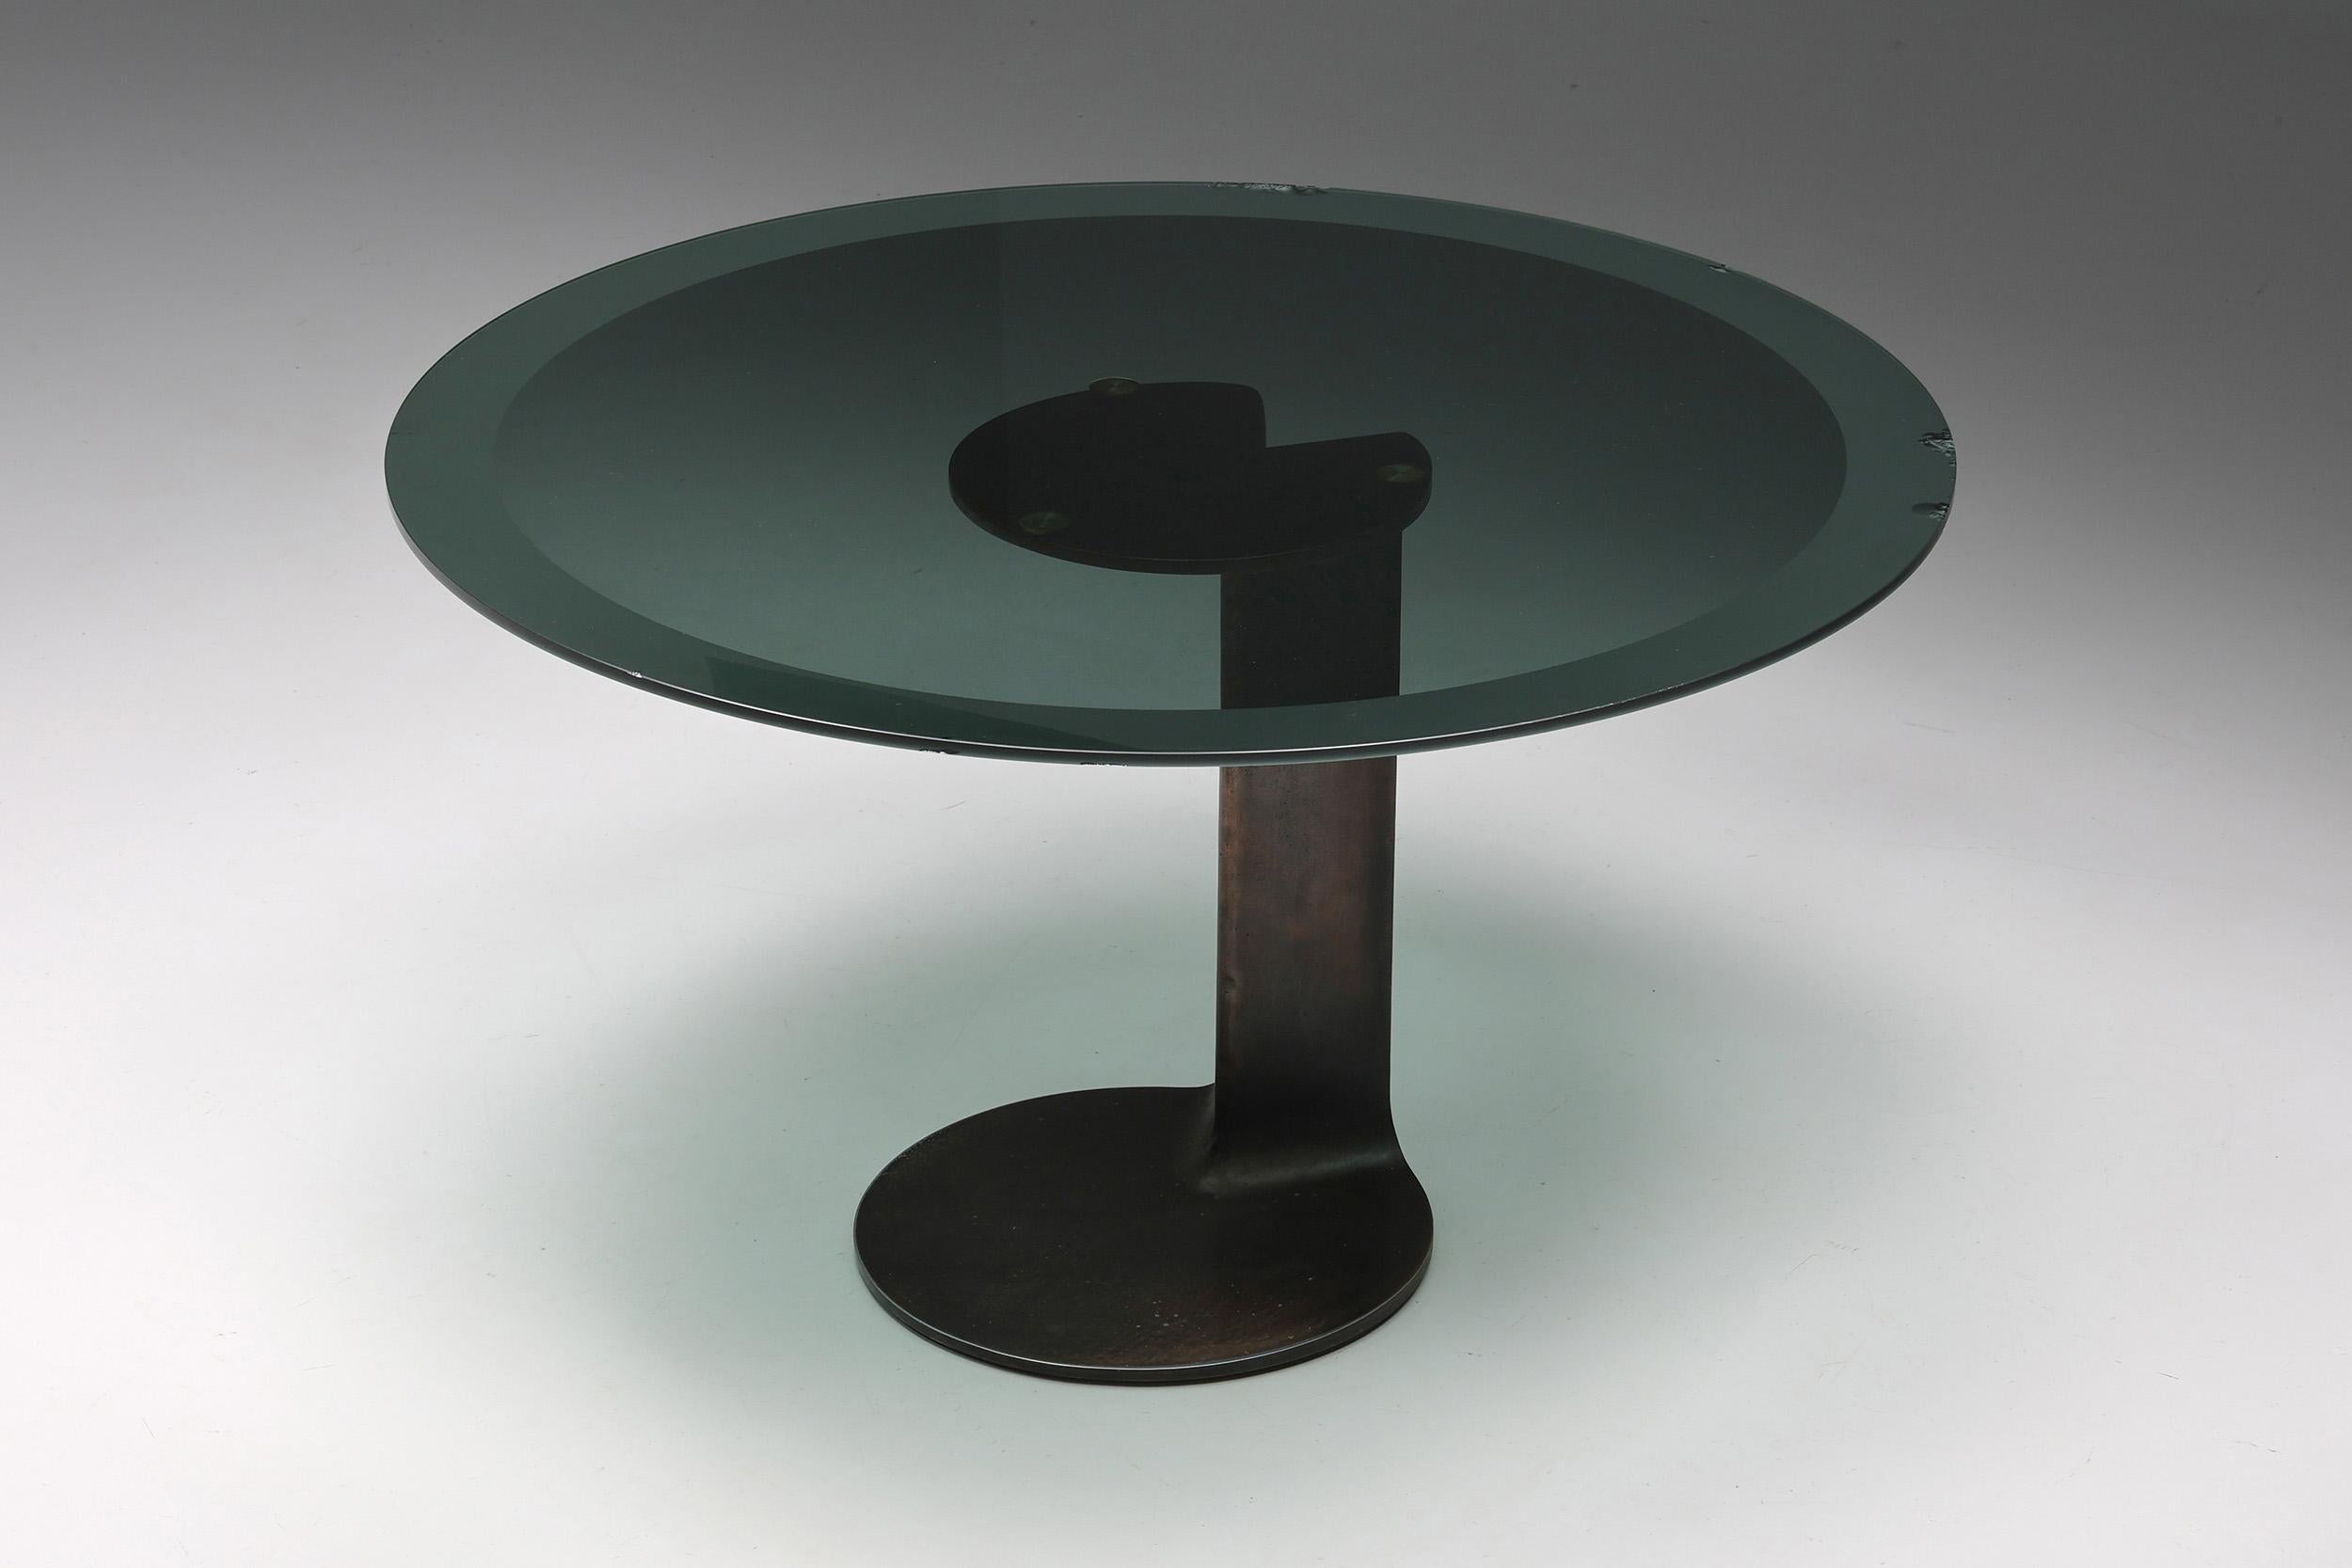 TL59 ; table de salle à manger ; ronde ; bronze ; verre ; verre fumé ; Afra & Tobia Scarpa ; Poggi ; 1975 ; Italie ; Design italien ; Post-Moderne ; 
 
Cette remarquable table de salle à manger ronde a été conçue par Afra & Tobia Scarpa pour Poggi